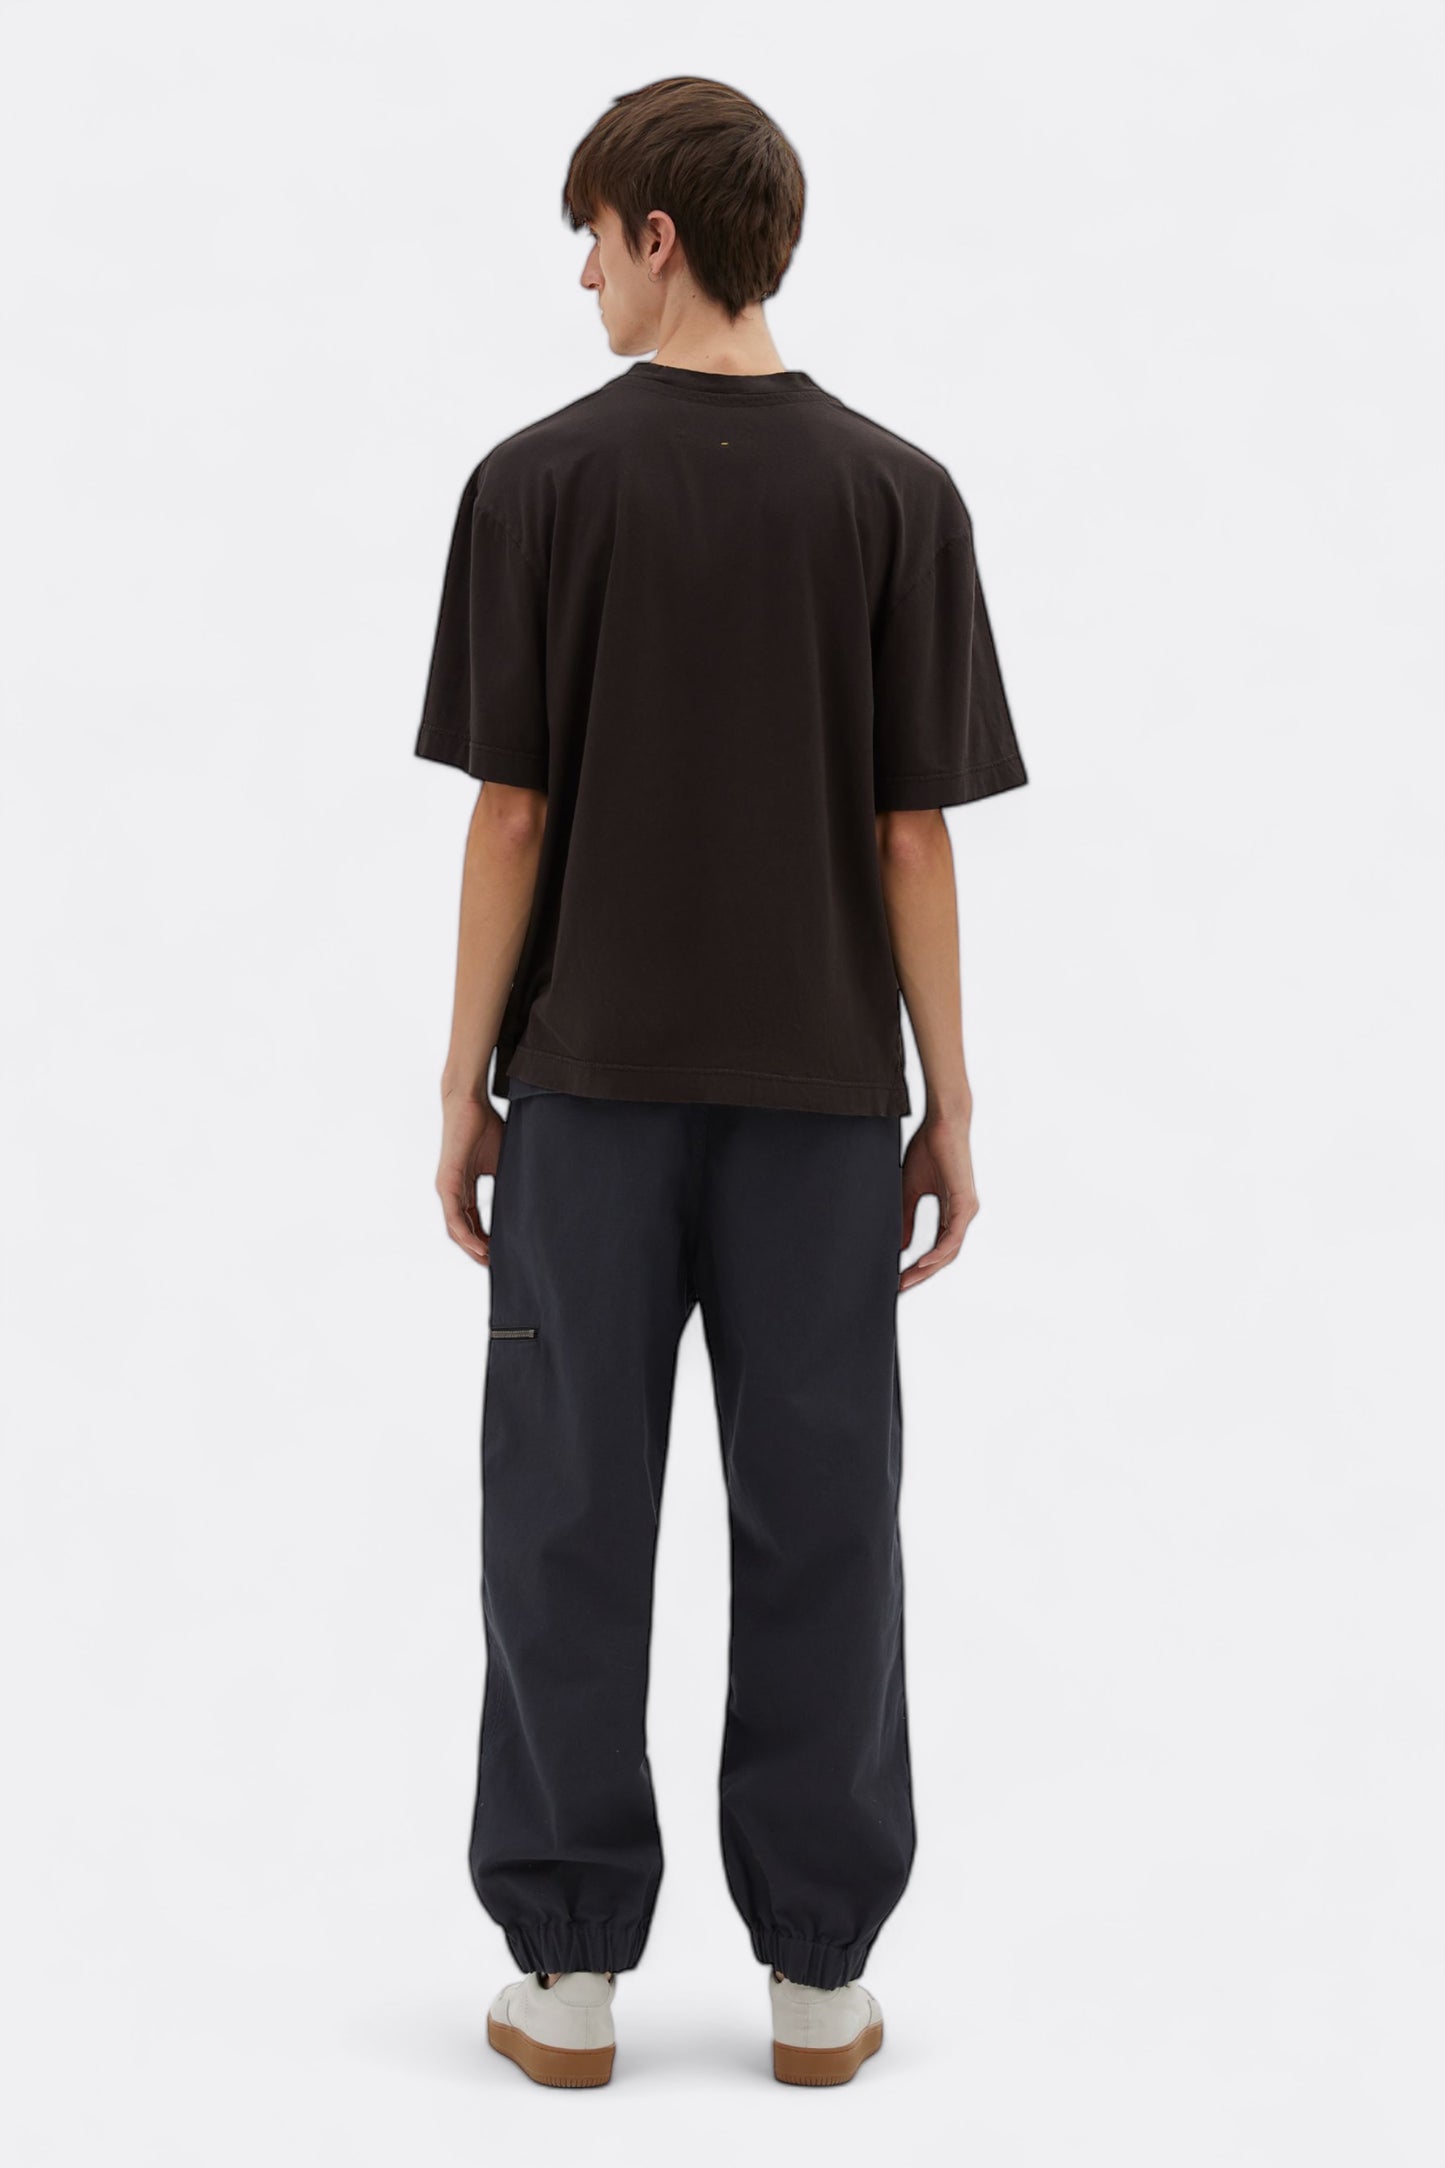 Margaret Howell - MHL. Simple T-Shirt Cotton Linen Jersey (Ebony)